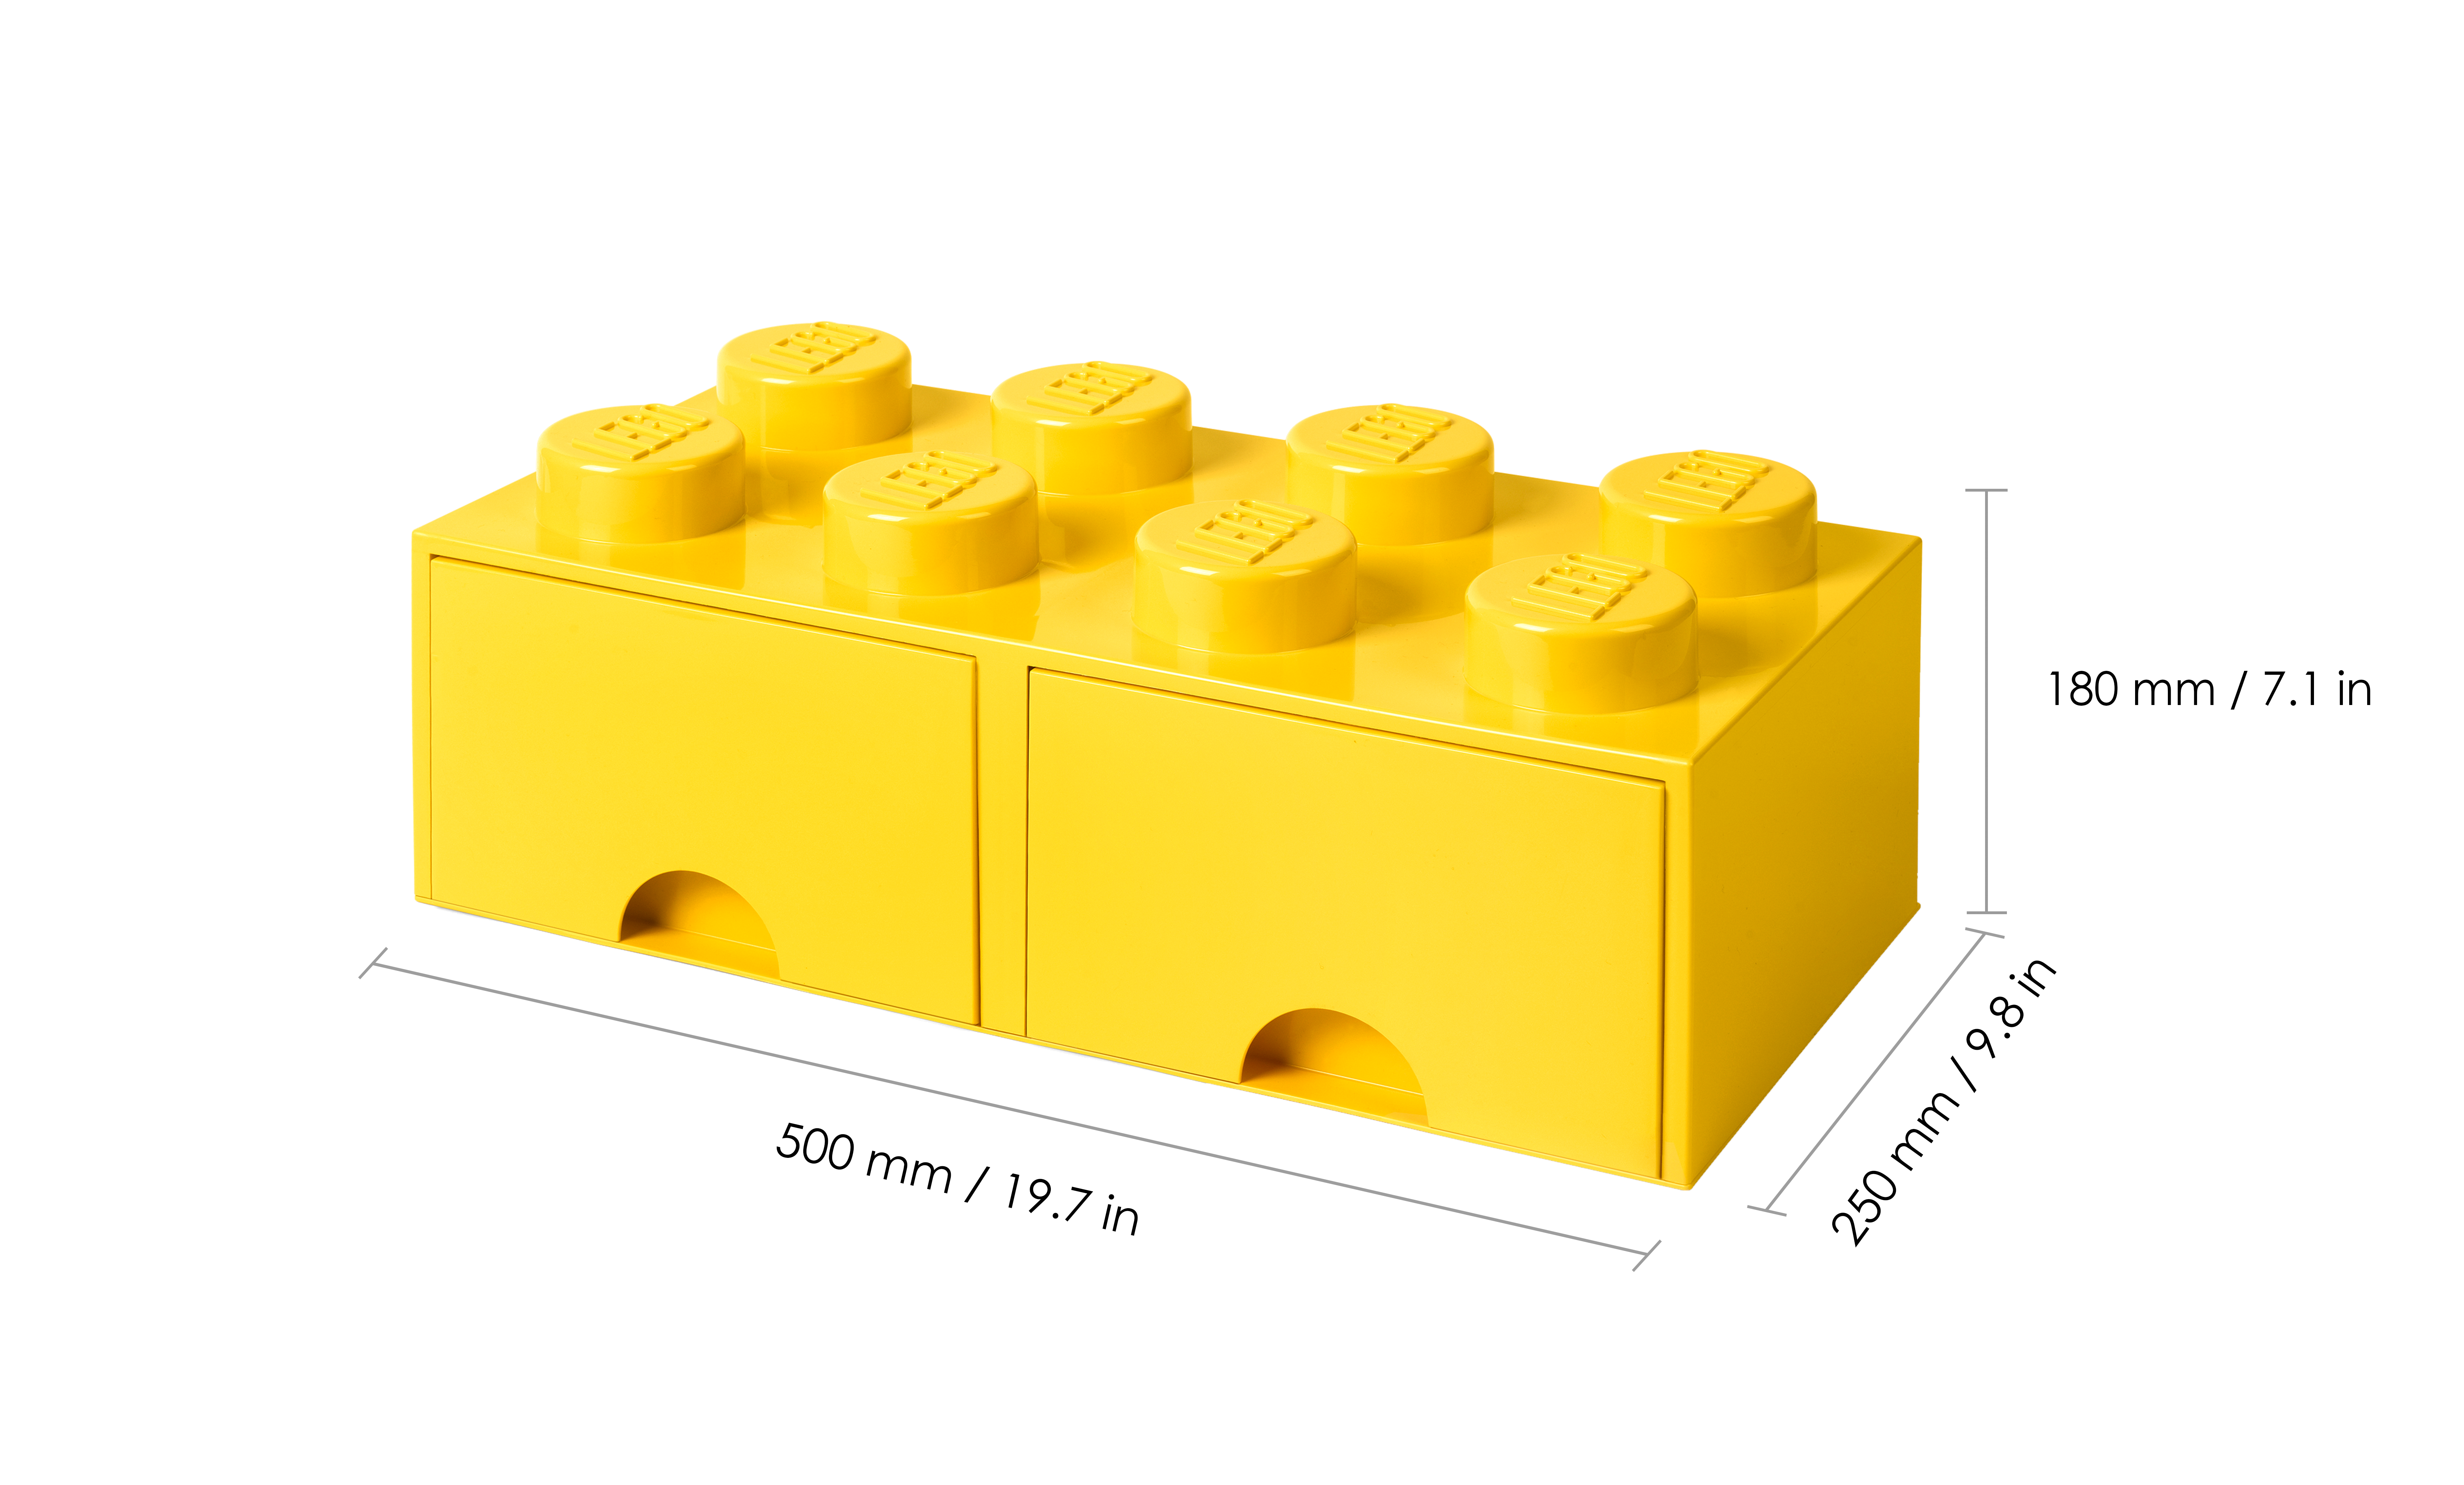 Lego - Brick Drawer 8 Storage Box, Green